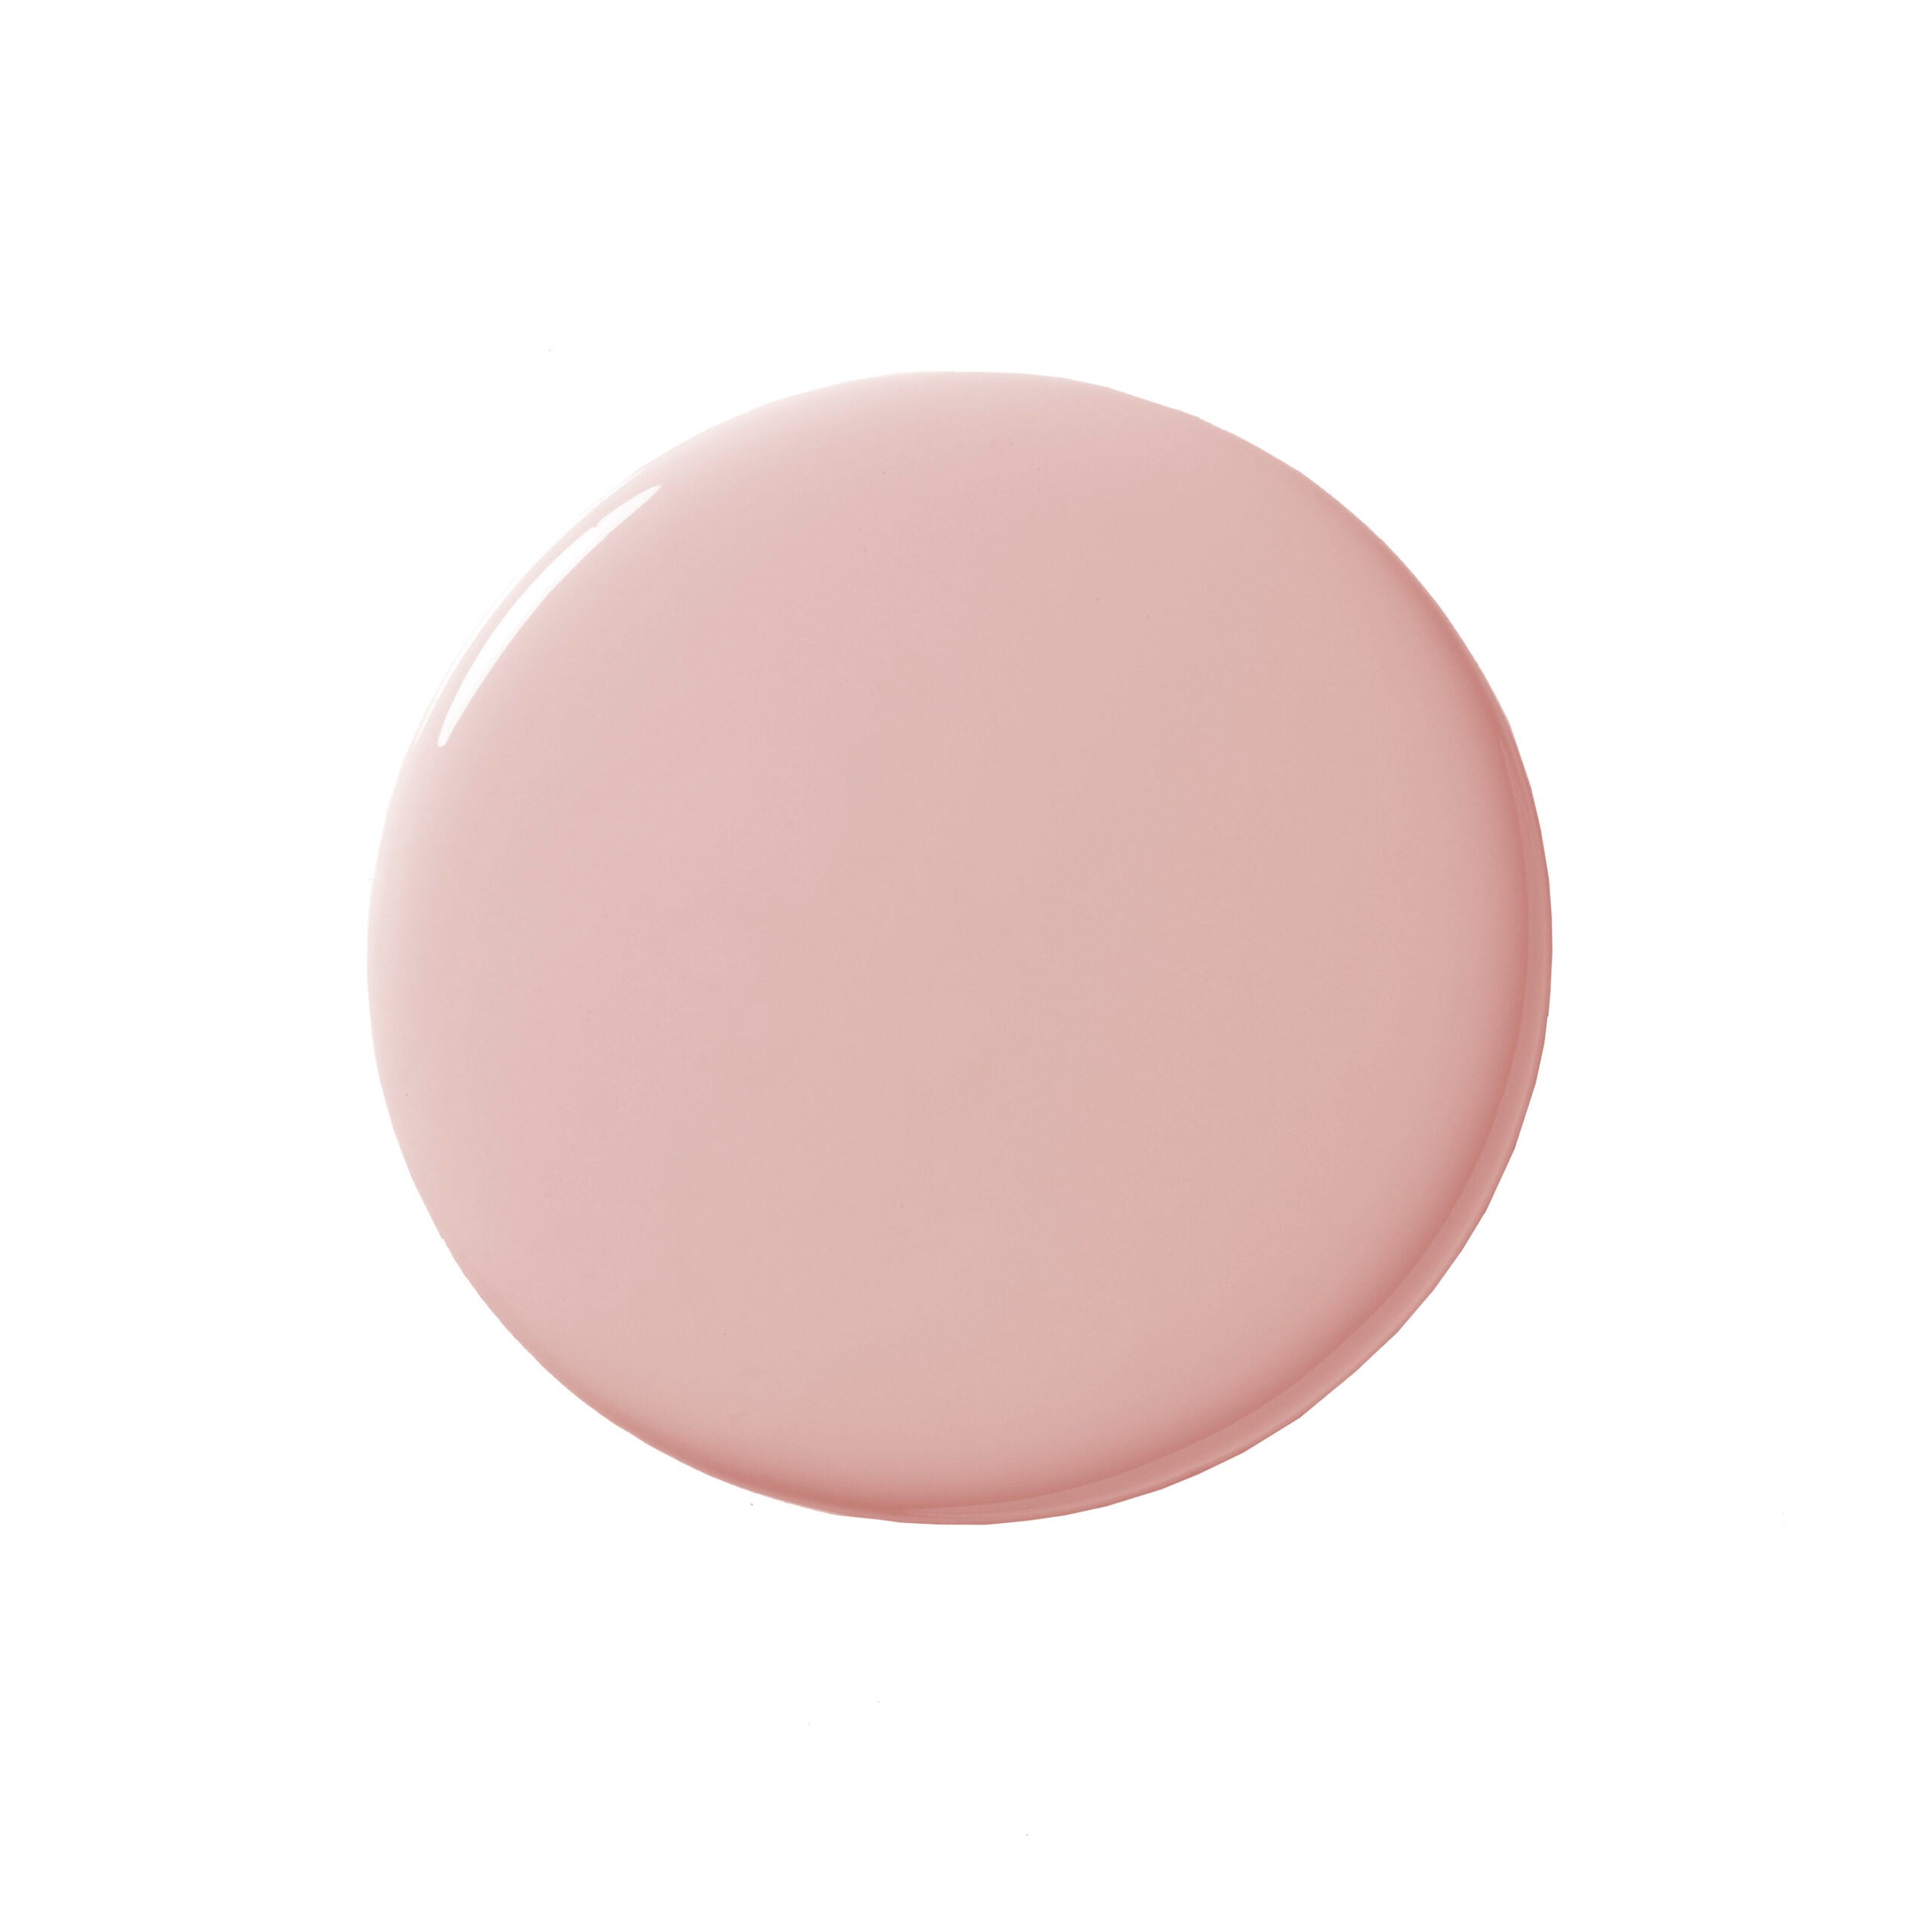 light pink blob